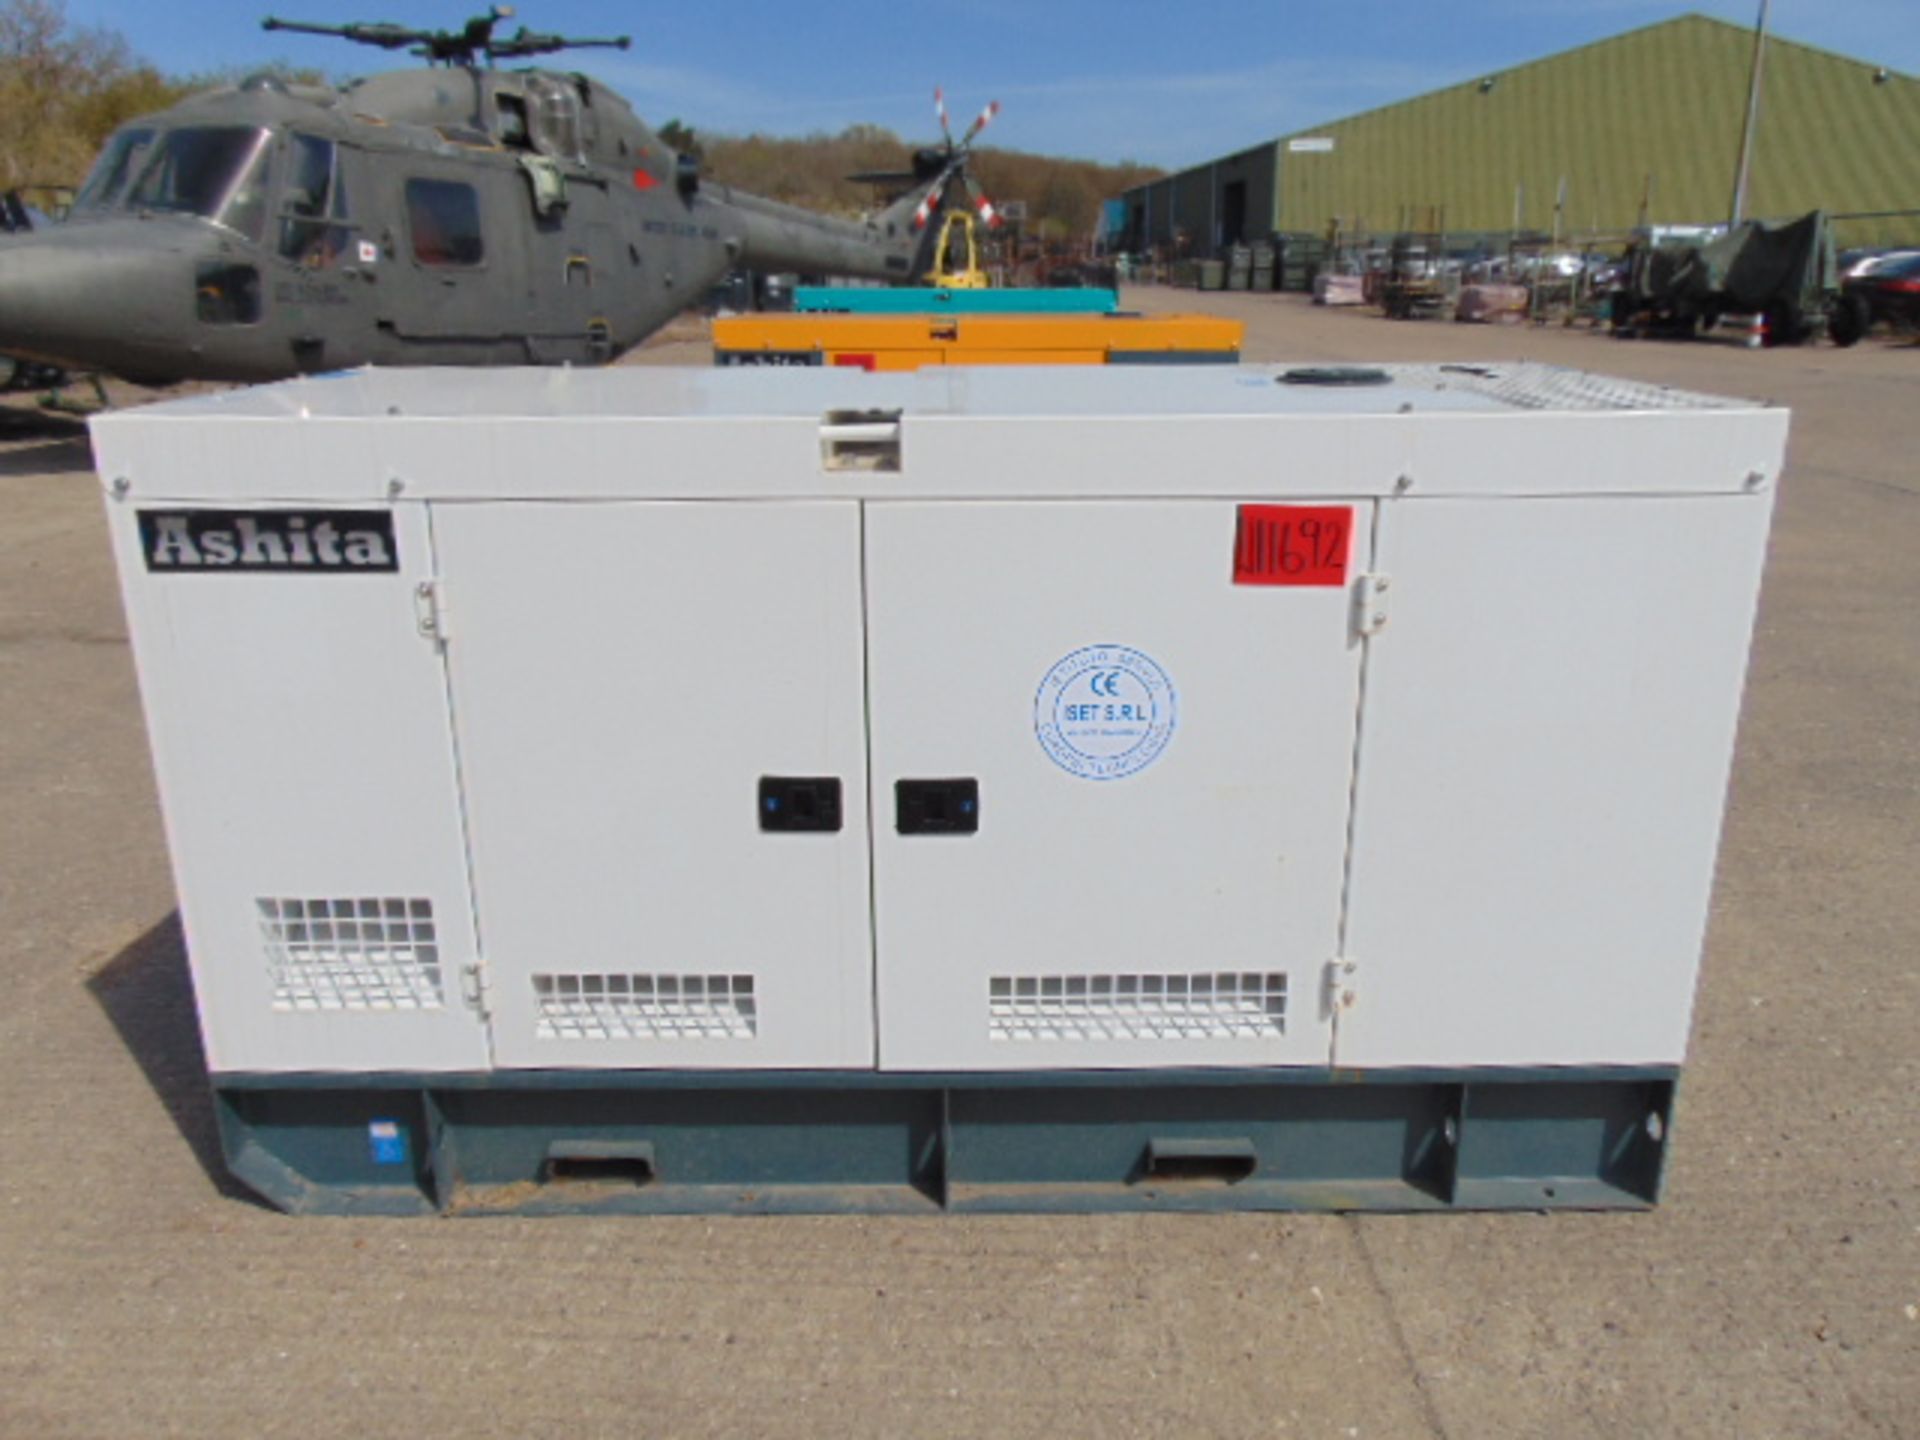 2020 UNISSUED 70 KVA 3 Phase Silent Diesel Generator Set. This generator is 3 phase 380 volt 50 Hz